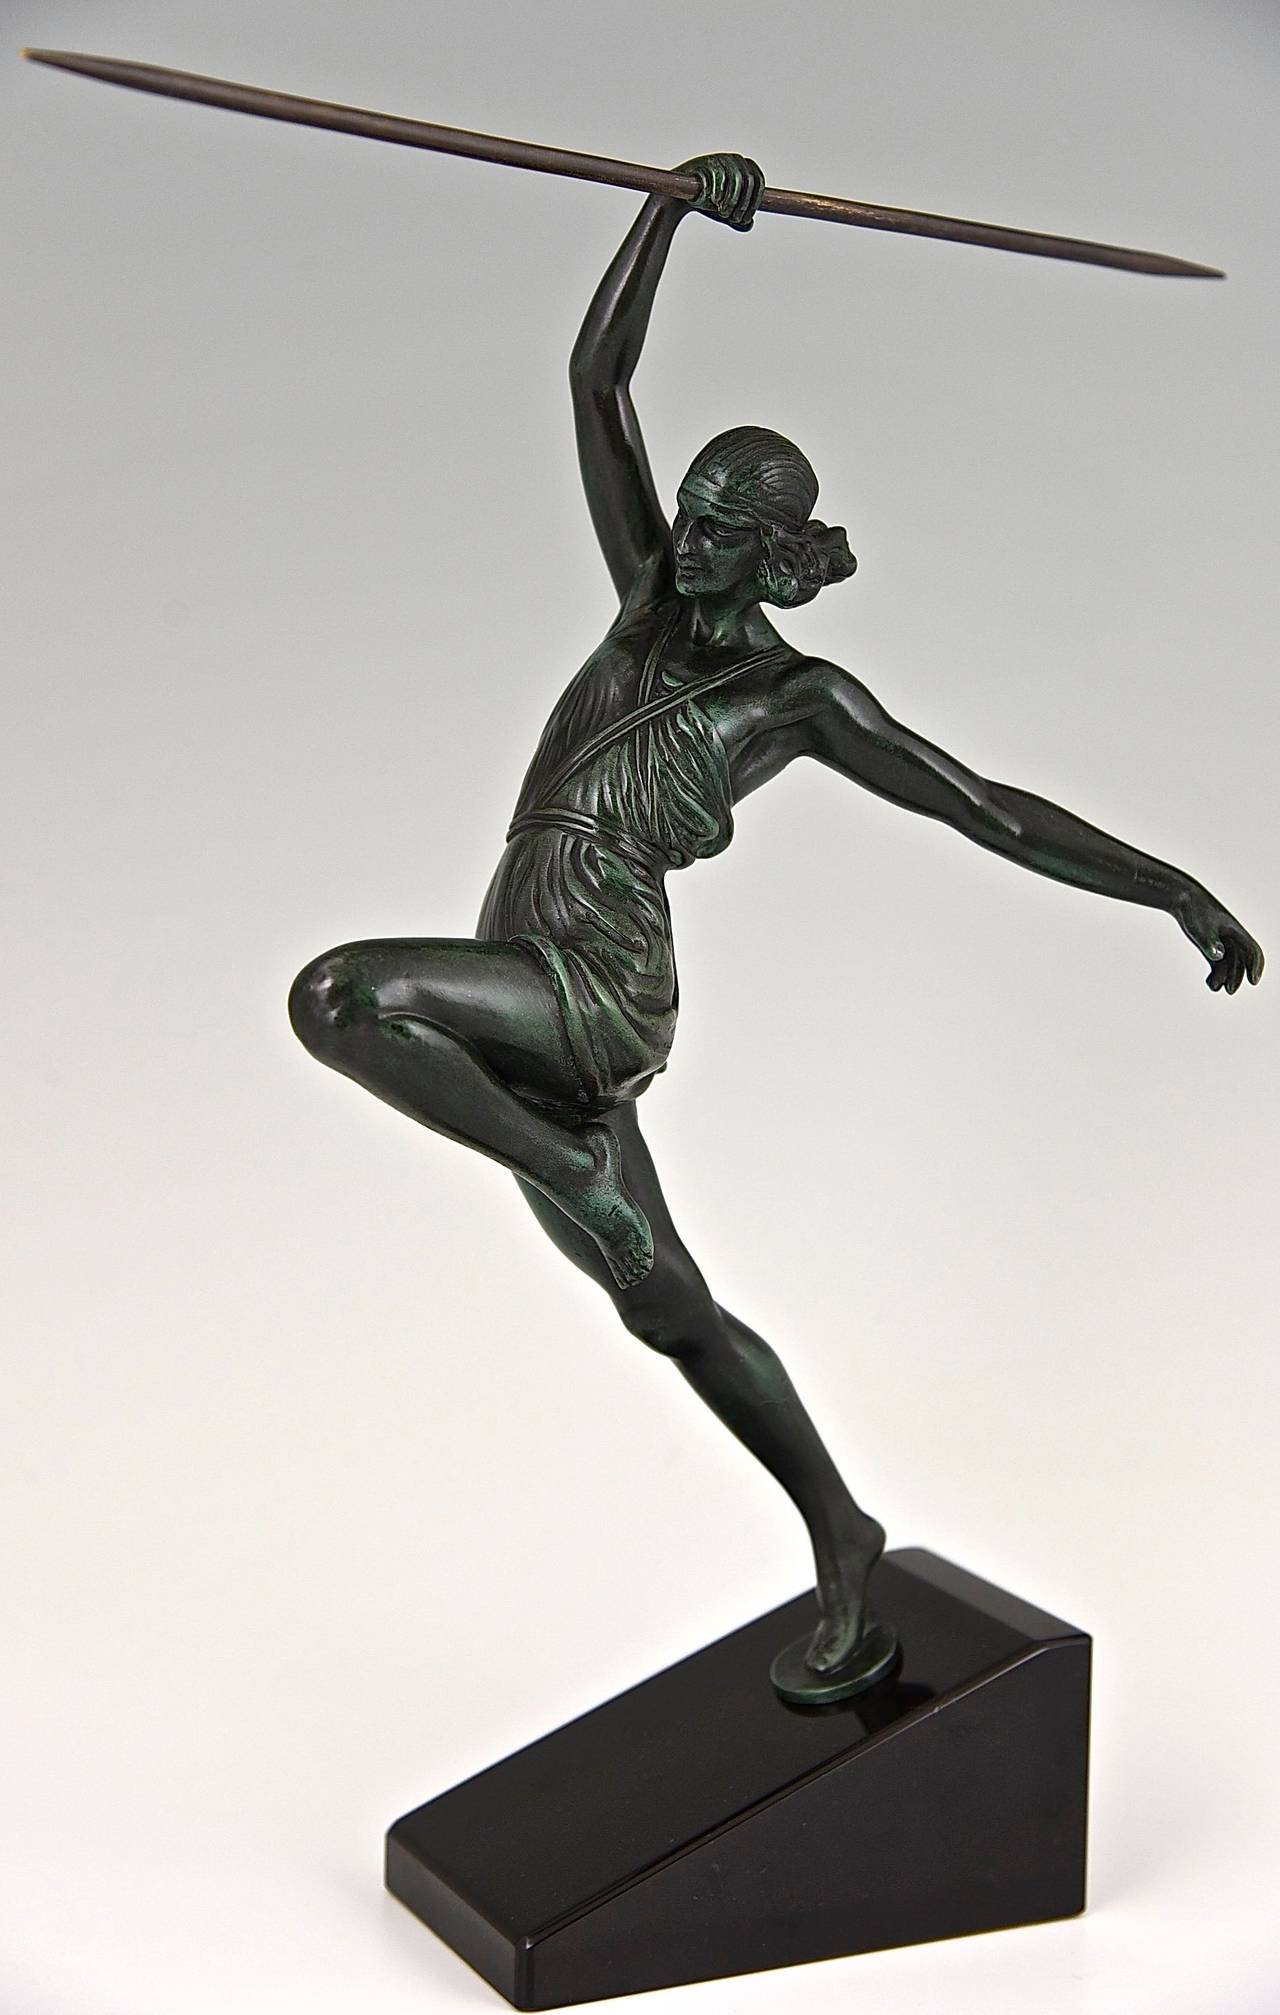 javelin thrower statue